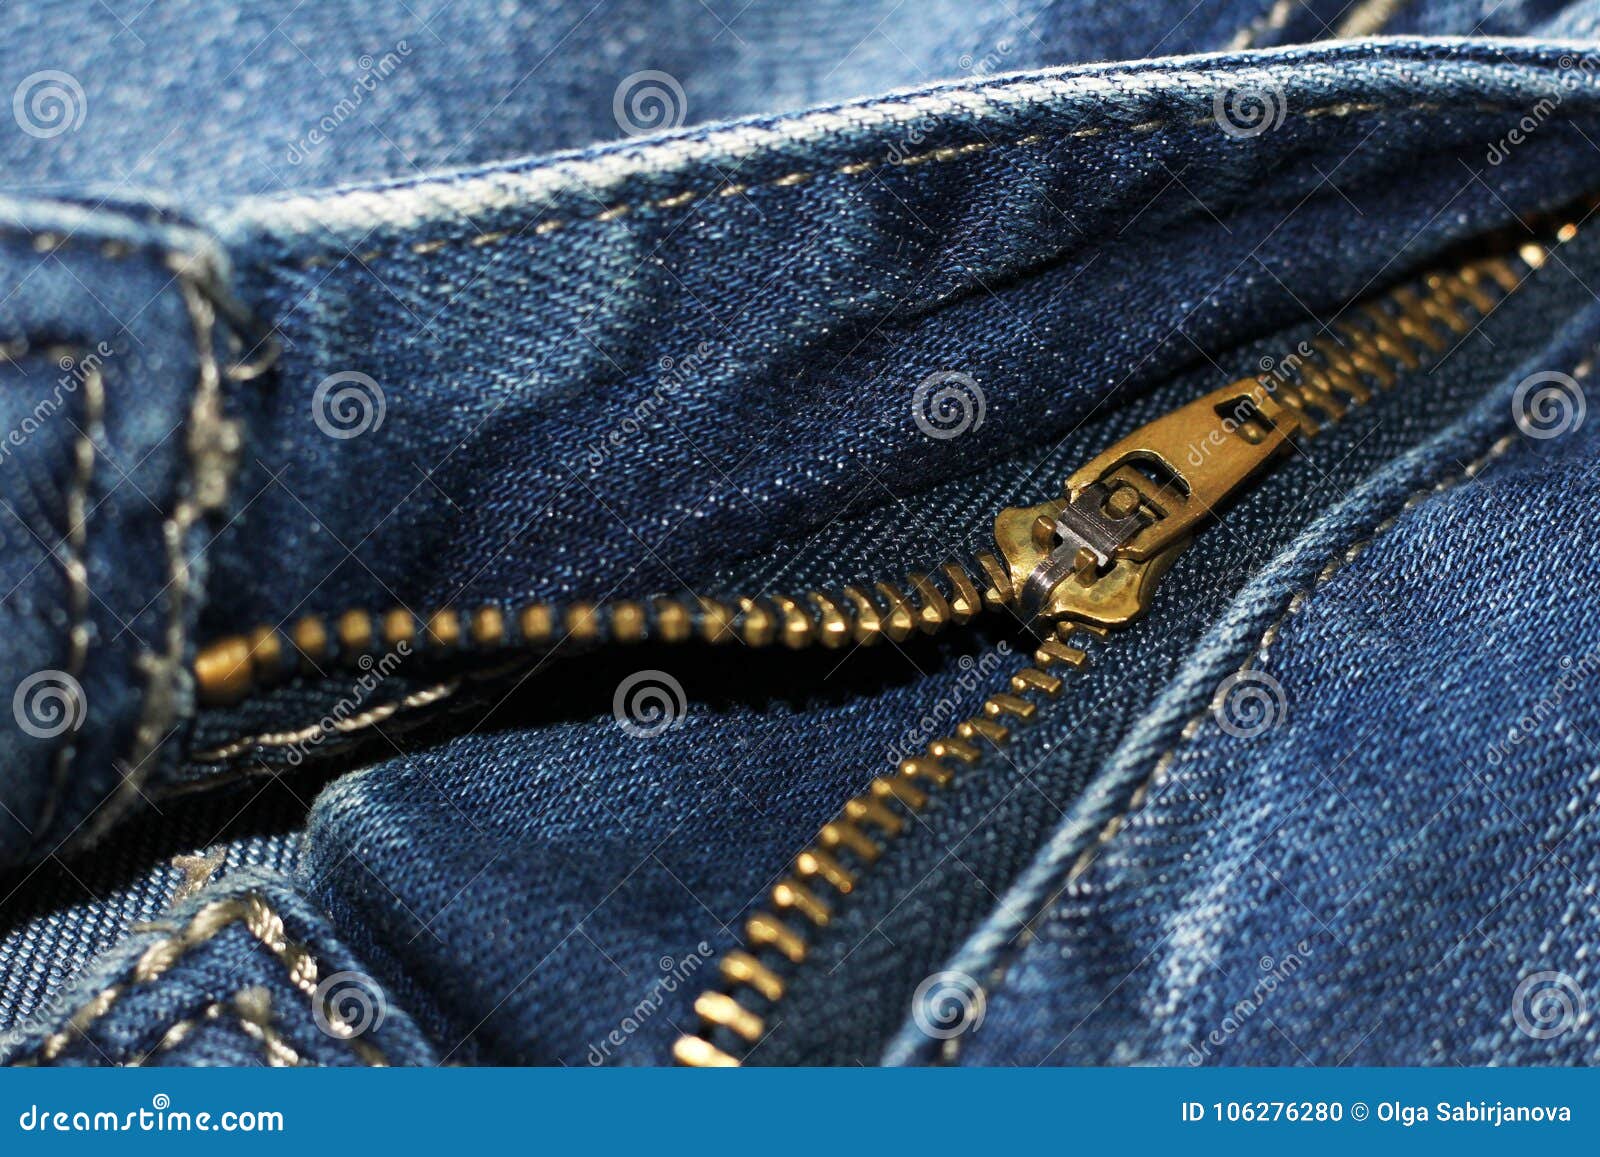 Locking Zipper on Jeans, Fashionable and Stylish Thing Stock Photo ...